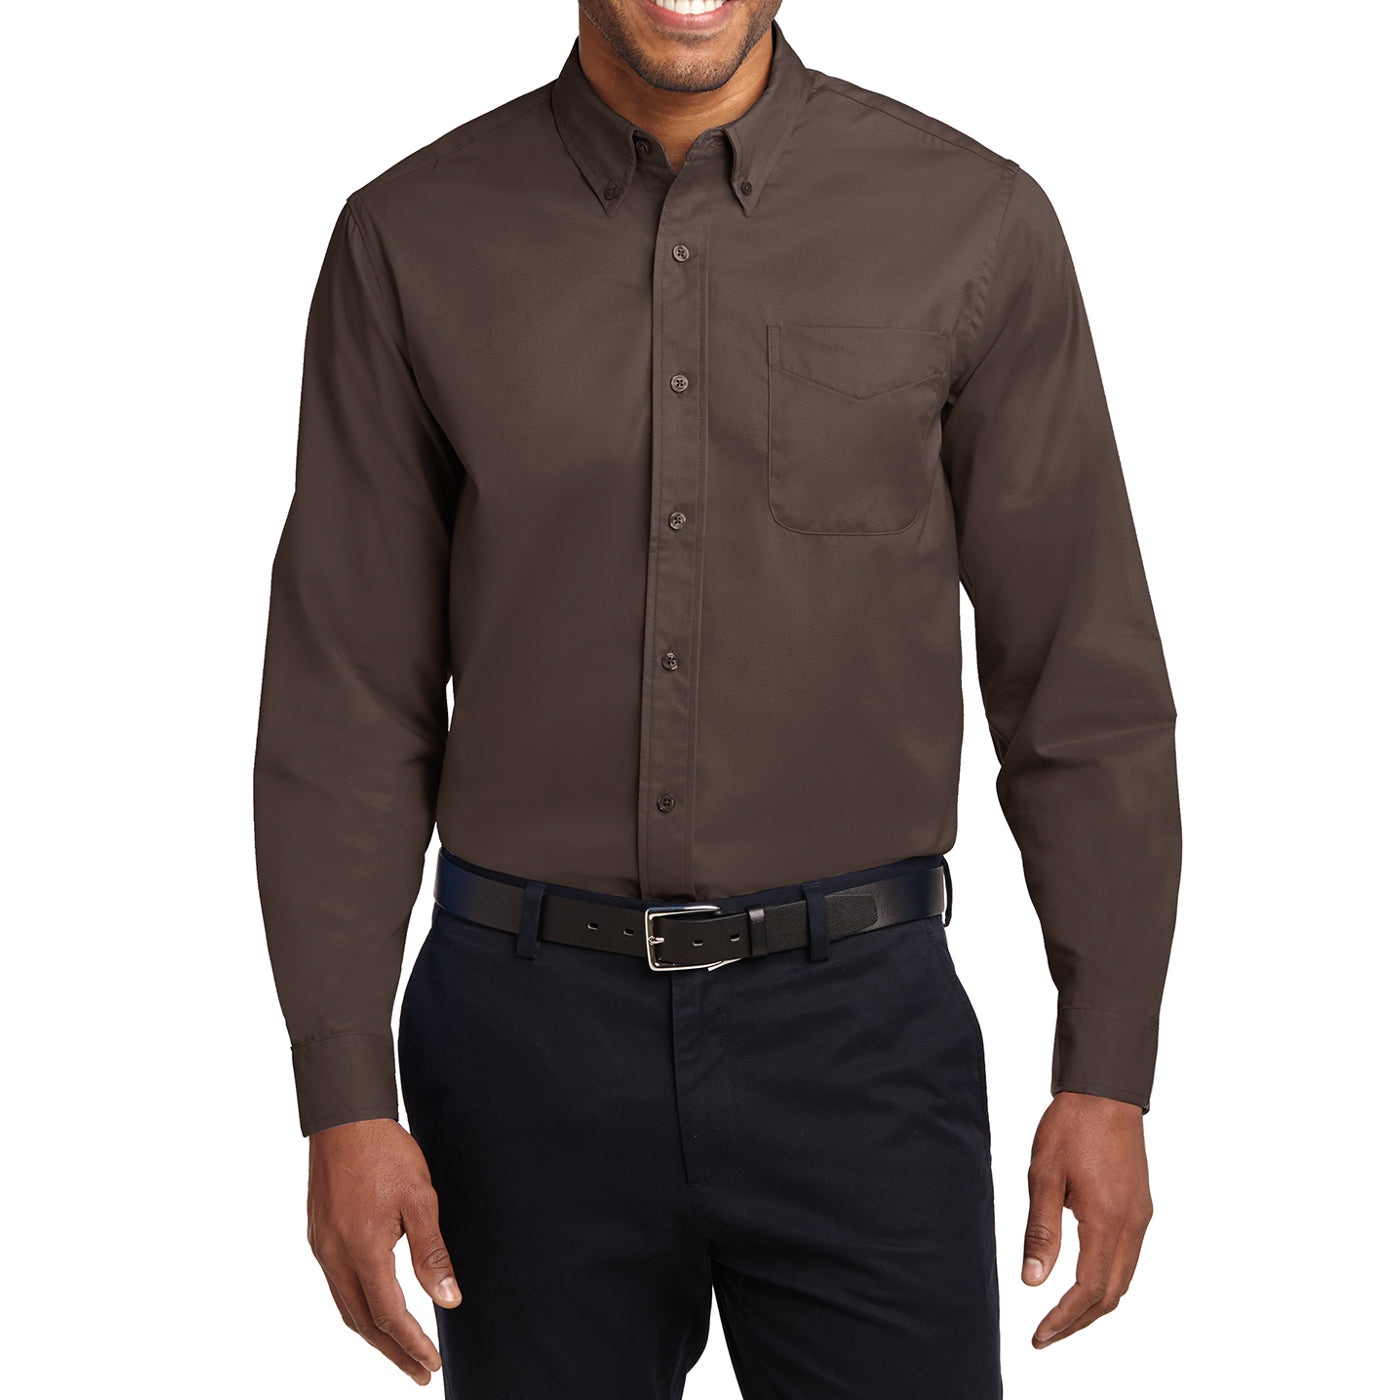 Men's Long Sleeve Easy Care Shirt - Coffee Bean/ Light Stone - Front